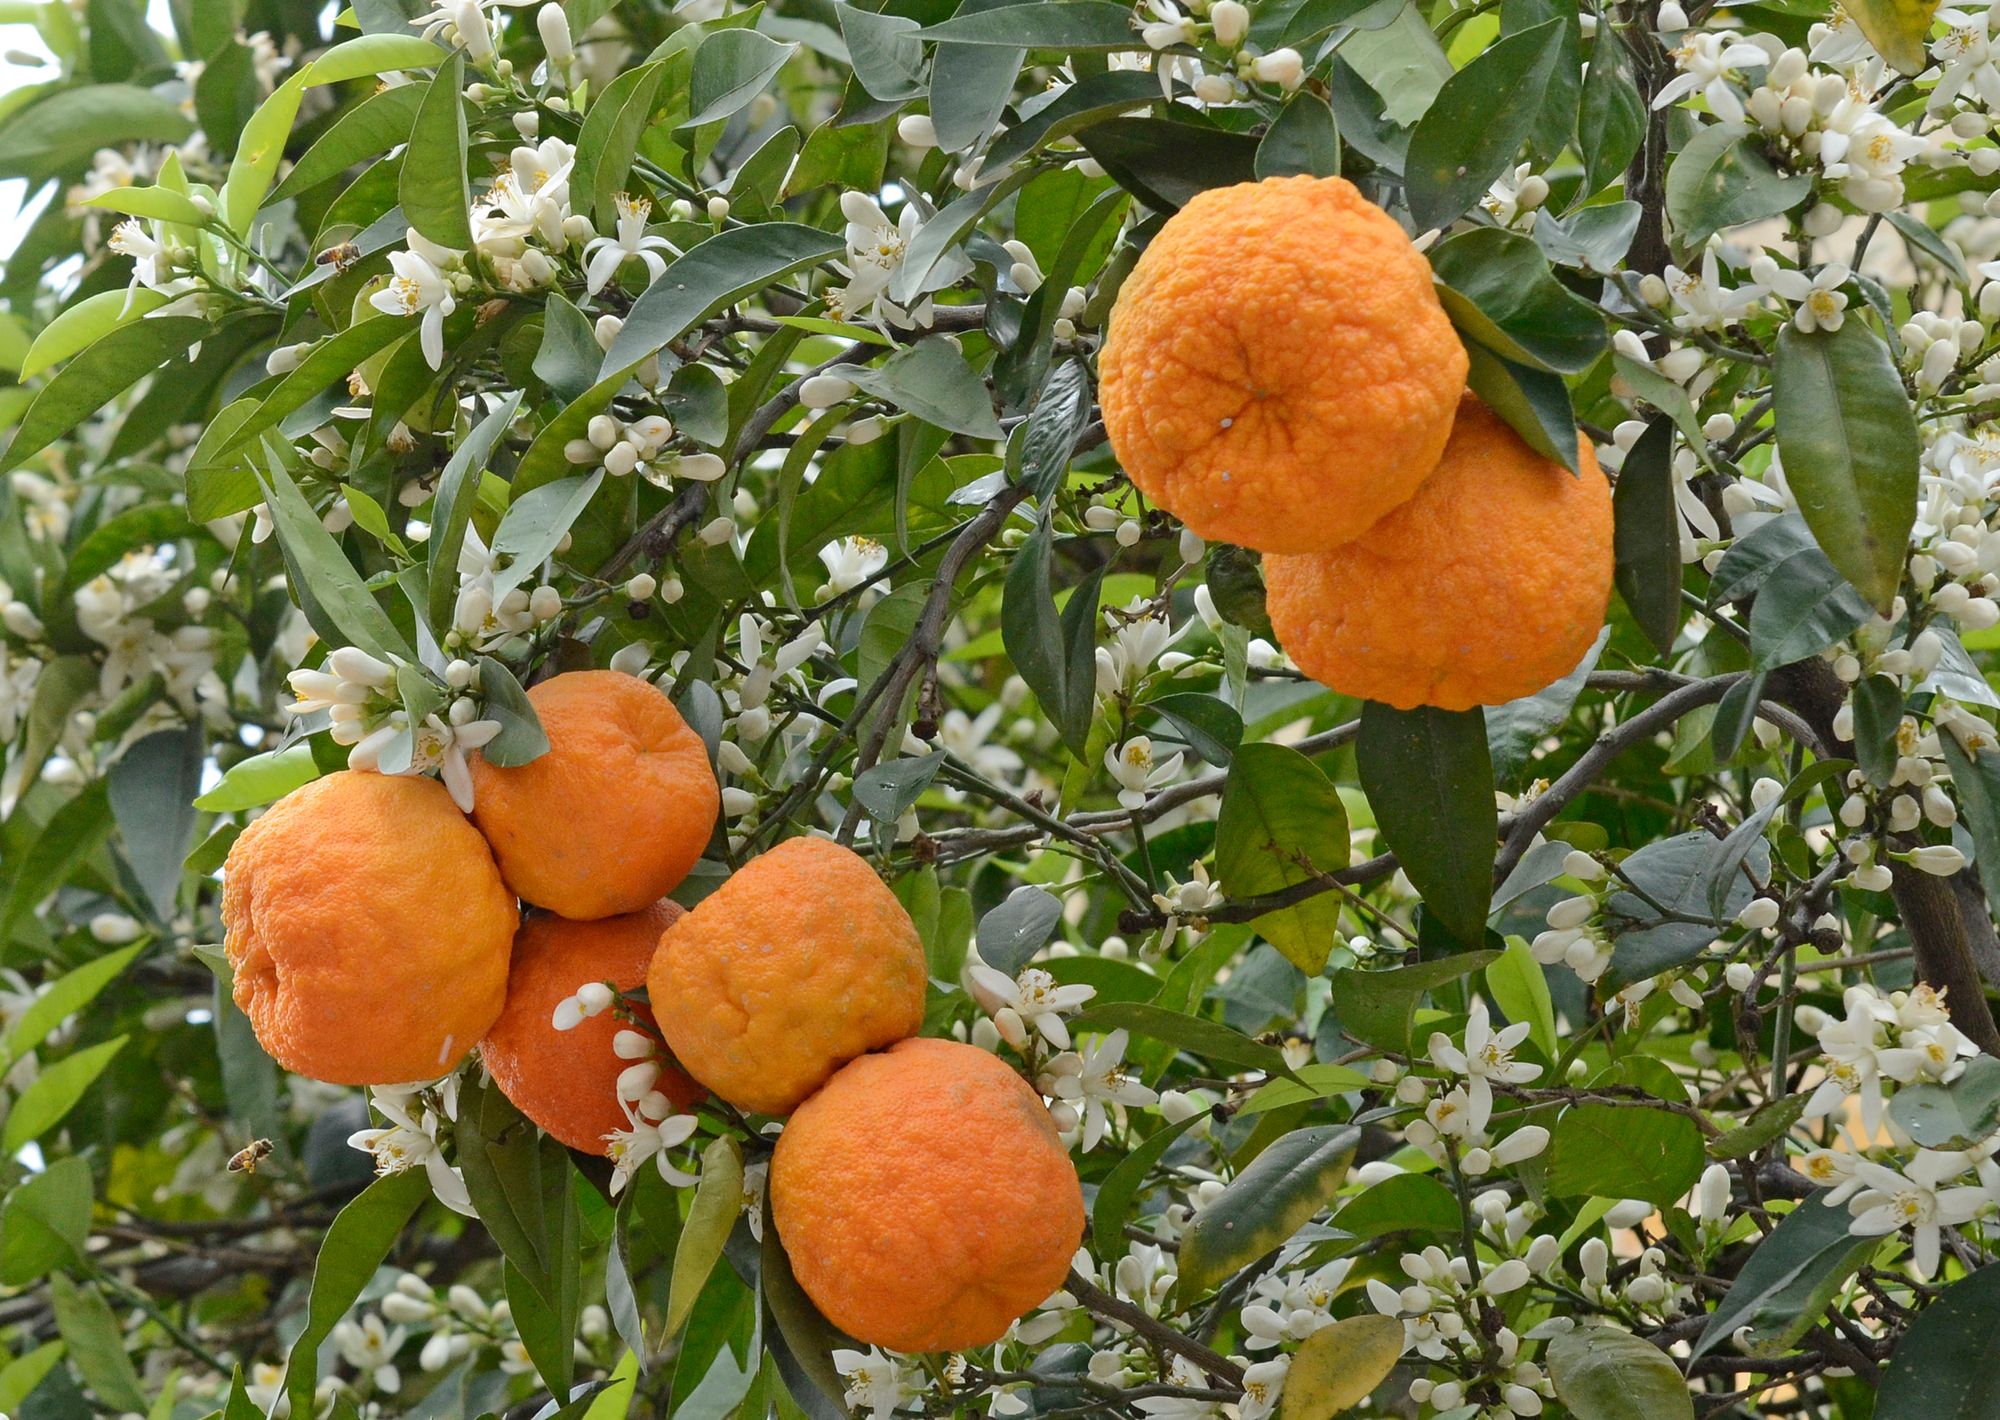 Seville oranges. Photo by Zeynel Cebeci via Wikimedia Commons.